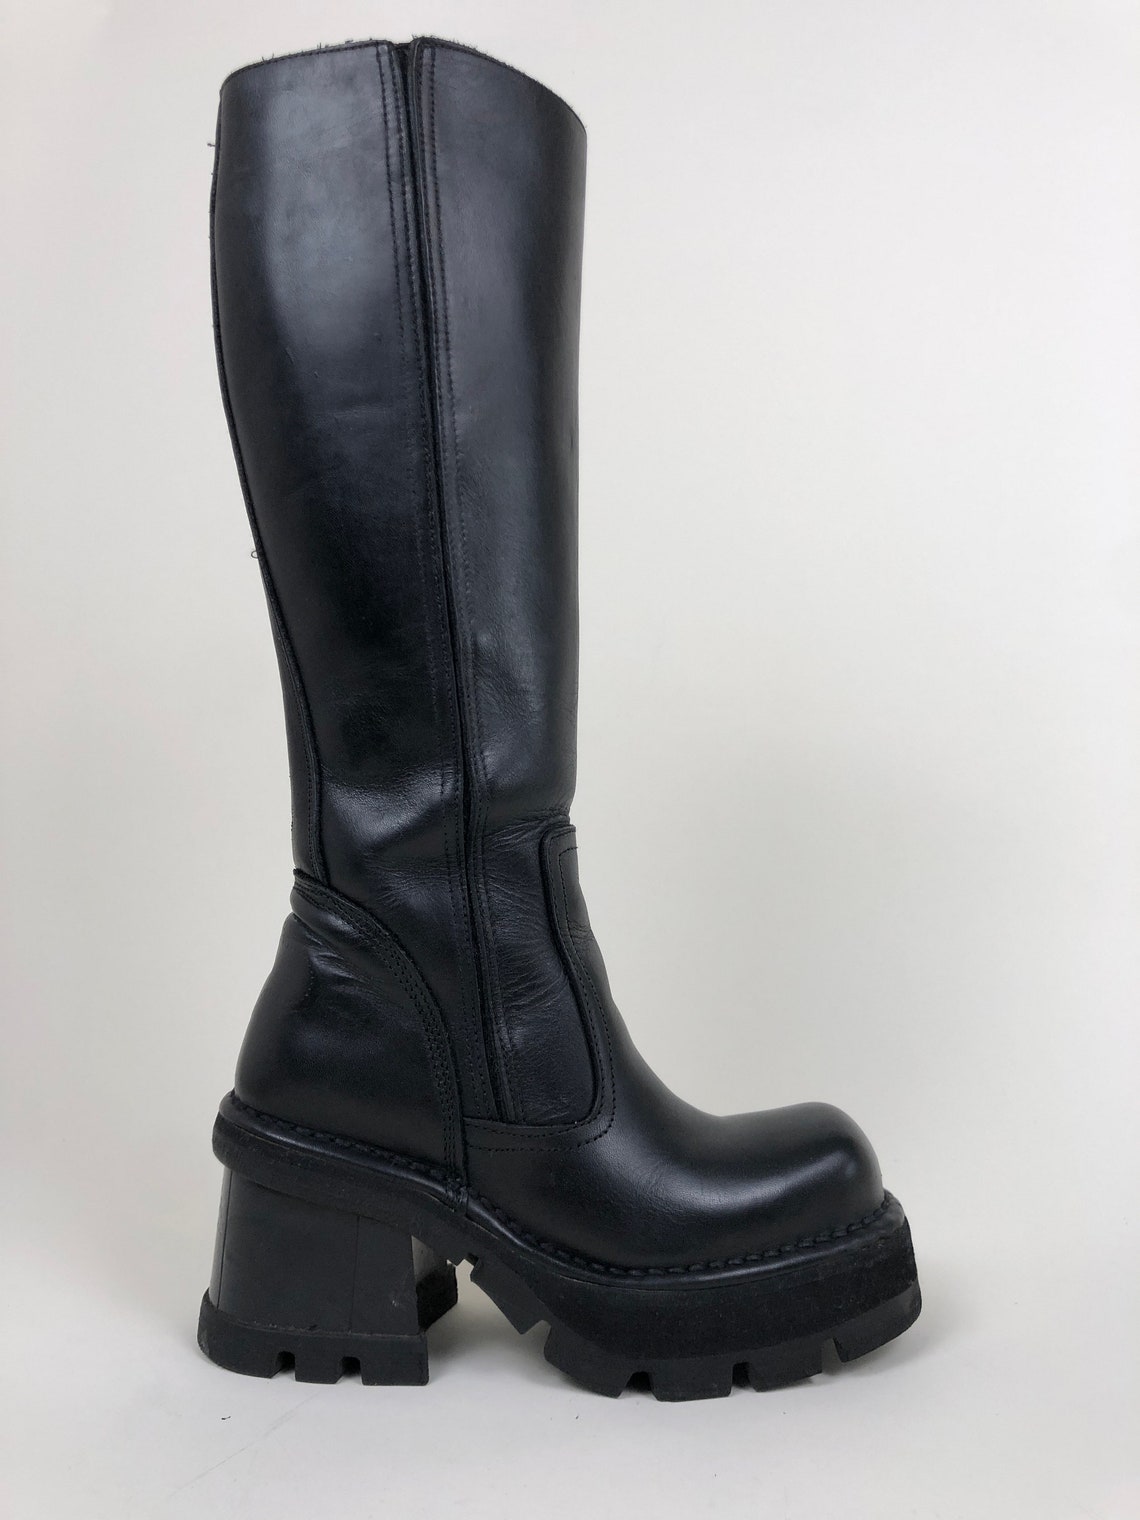 Vintage 90s NEW ROCK black tough leather platform boots / | Etsy